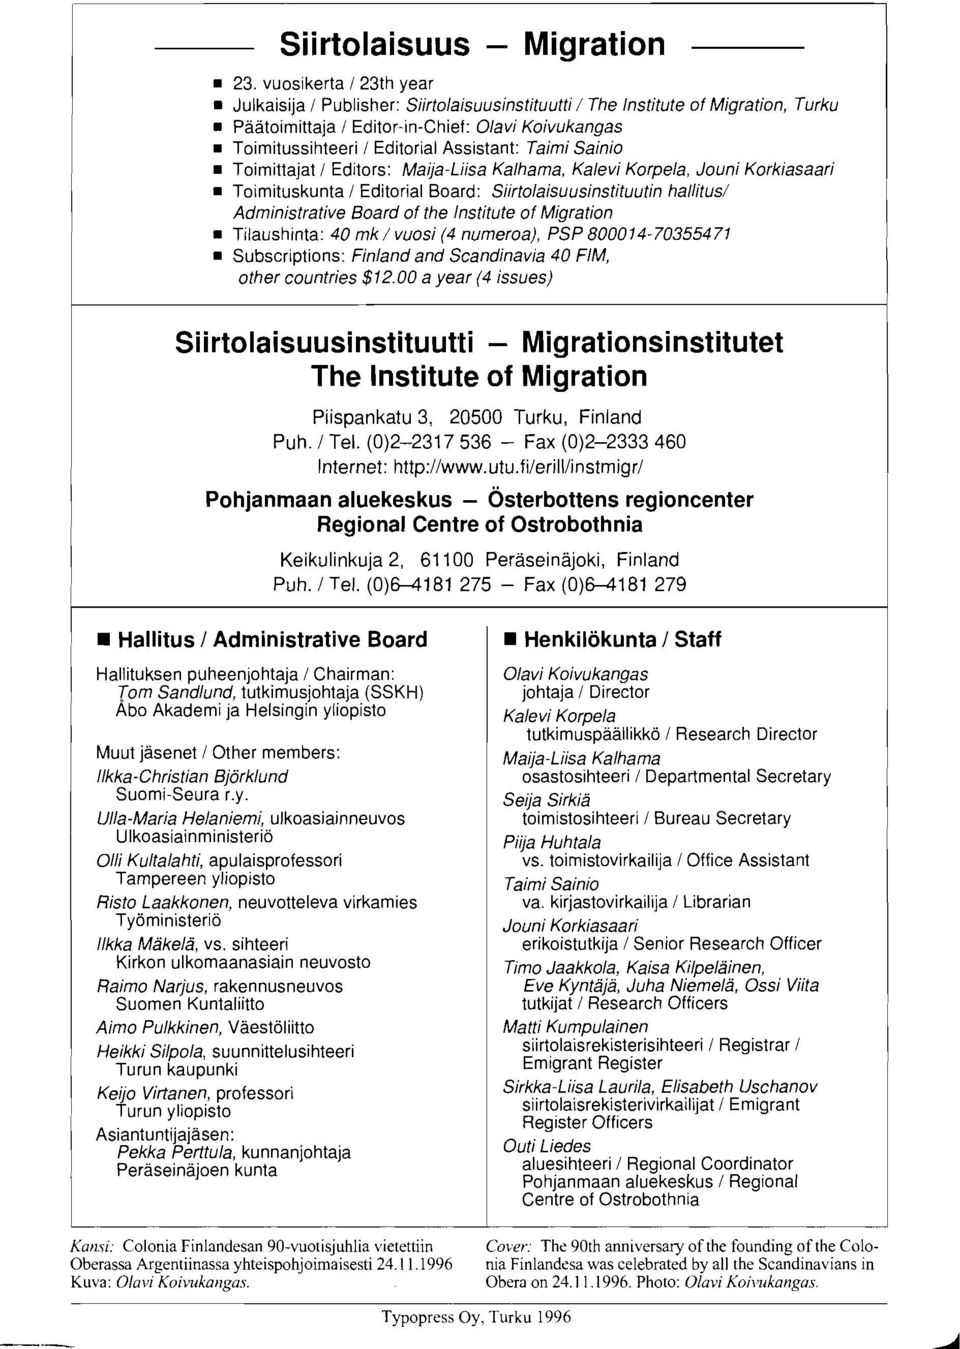 Siirtolaisuusinstituutin hallitus/ Administrative Board of the lnstitute of Migration r Tilaushinta: 40 mk / vuosi (4 numeroa), PSP 800014-70355471 r Subscriptions Finland and Scandinavia 40 FIM,